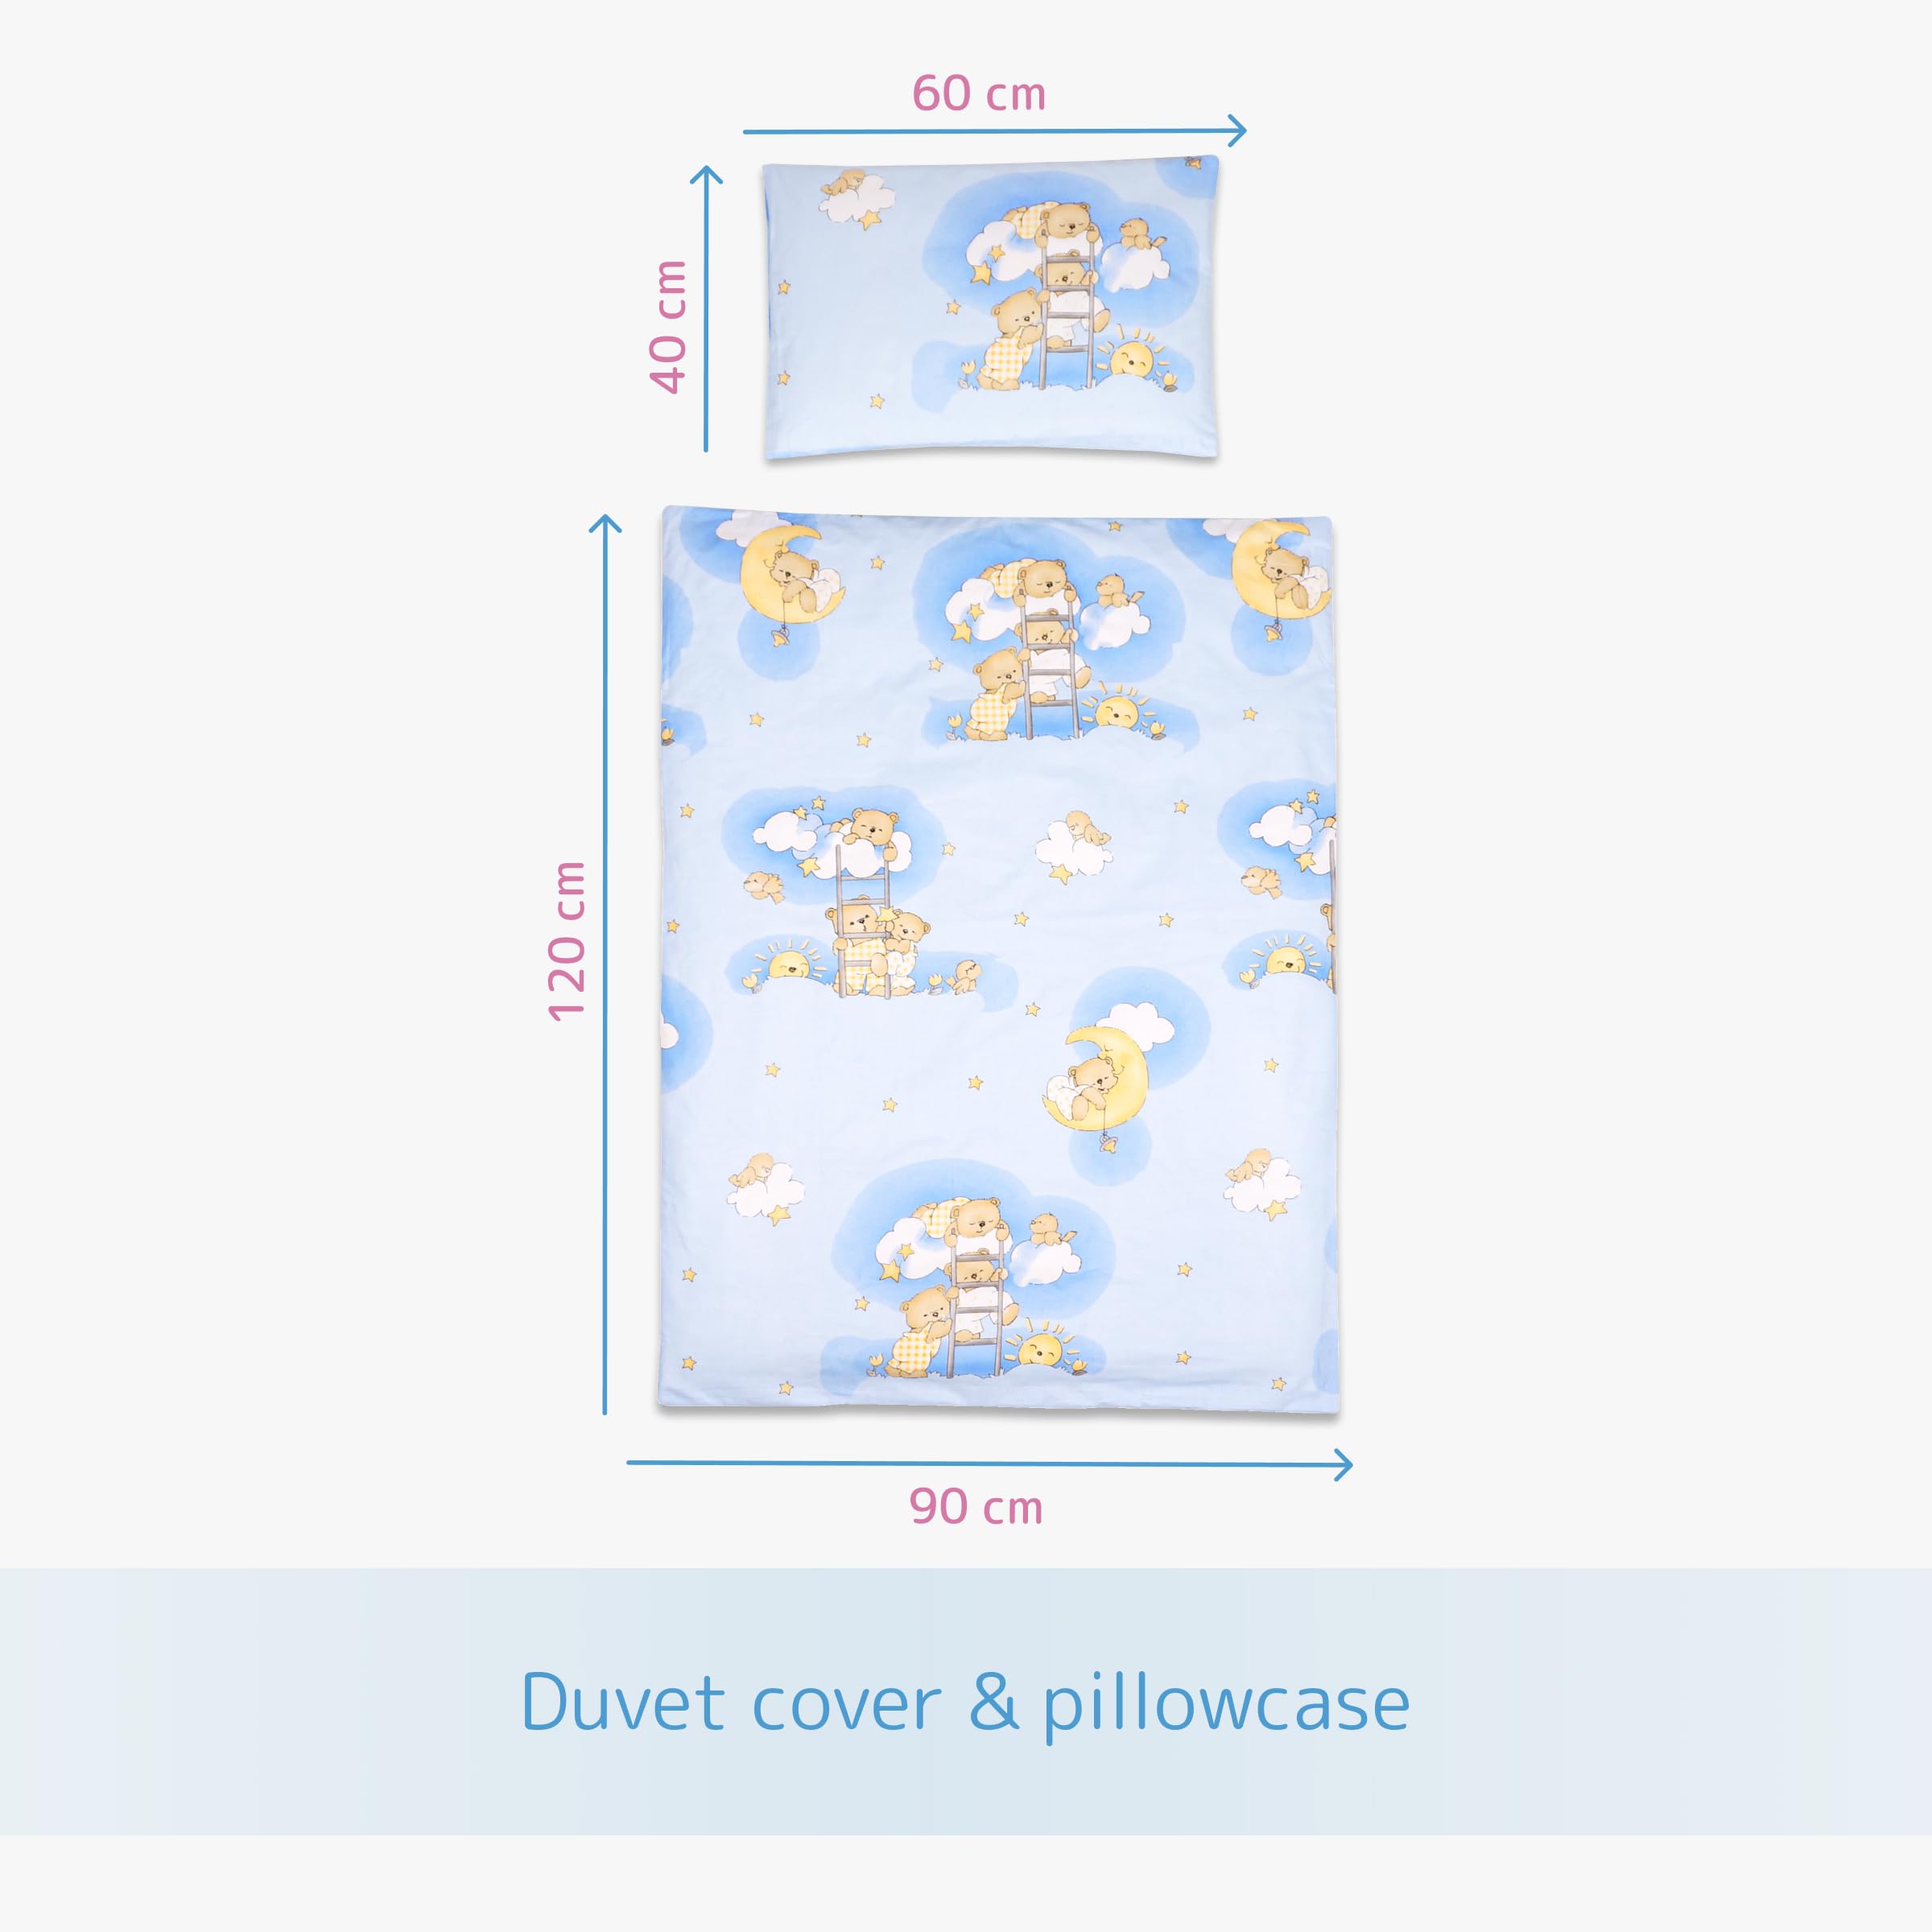 2 Piece Baby Kids Bedding Set 120x90 cm Duvet Cover & Pillowcase for Toddler Cot (Ladders Blue)